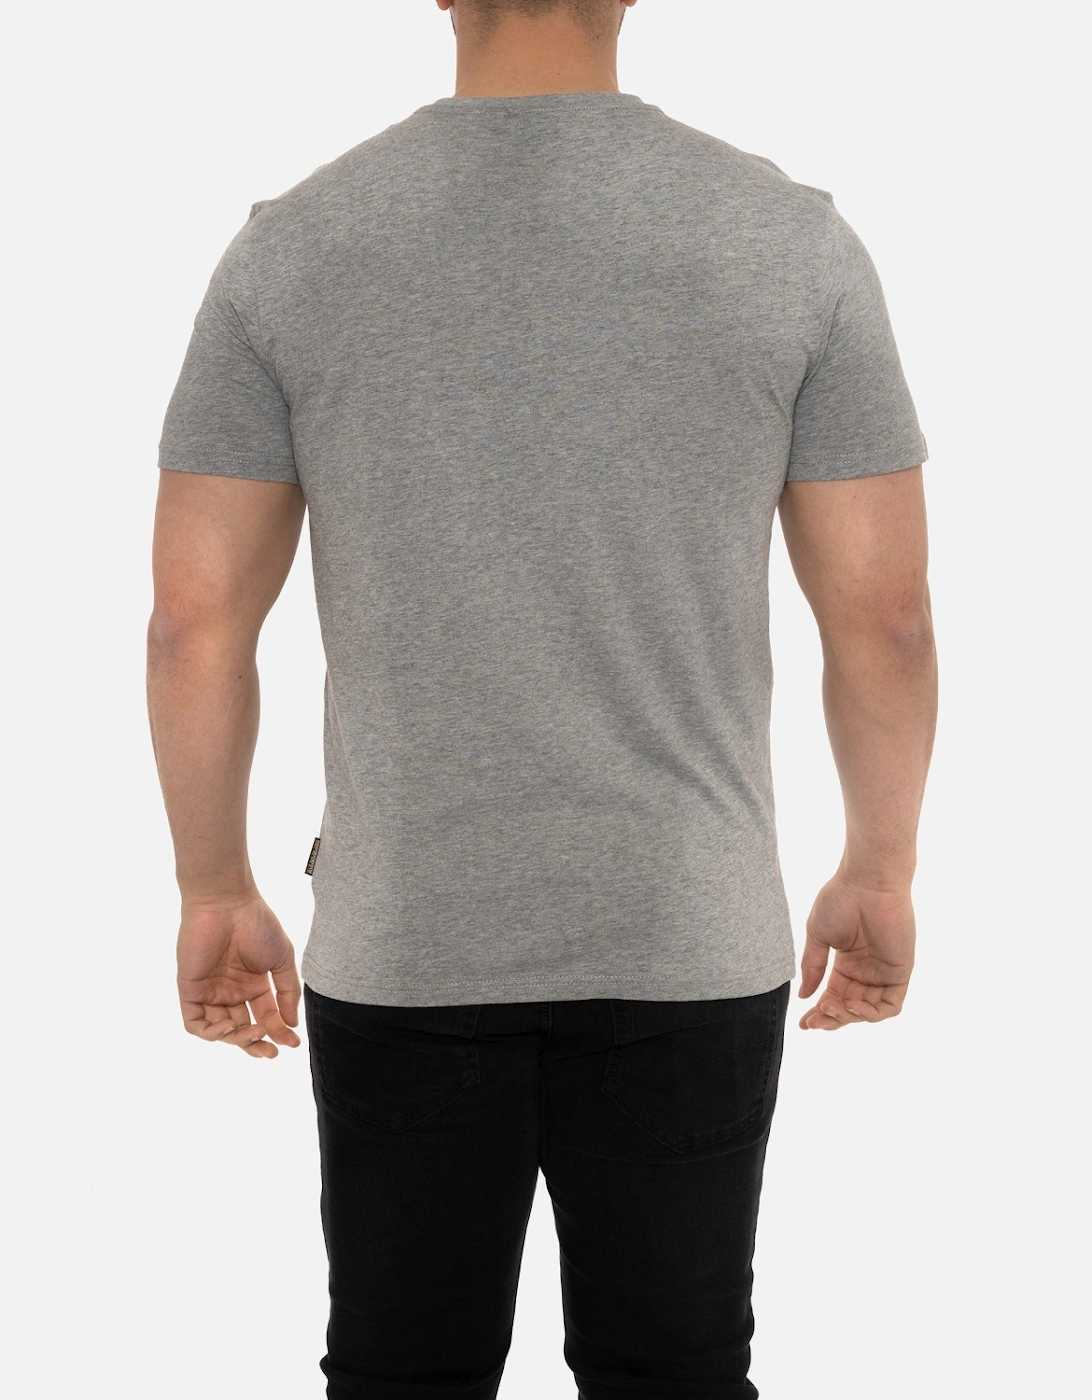 Mens Salis Sum T-Shirt (Grey)